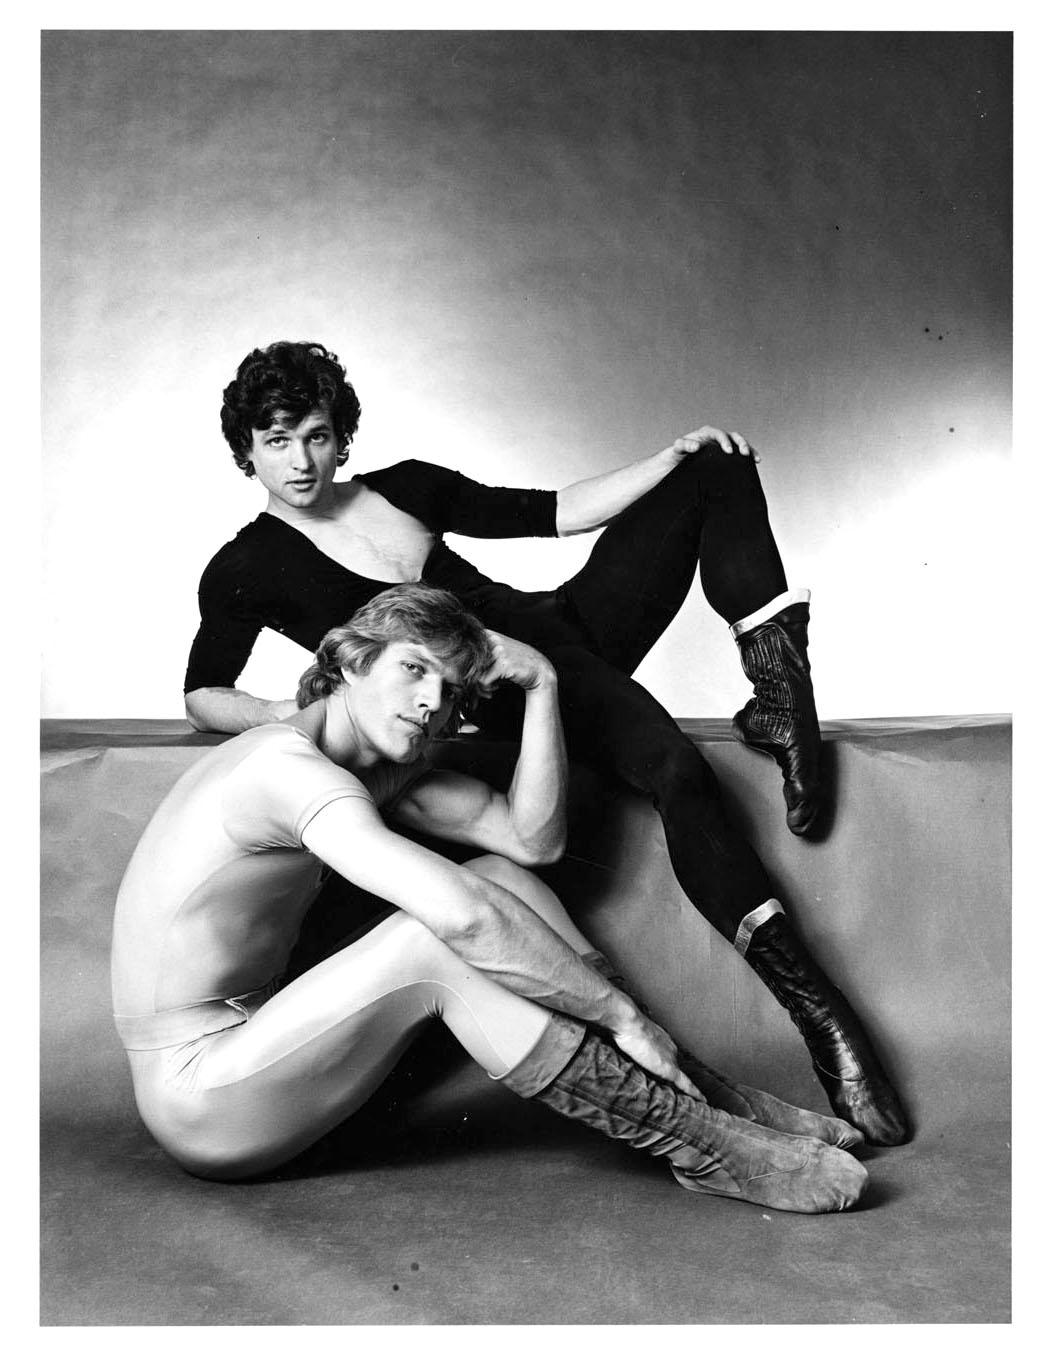 Jack Mitchell Black and White Photograph - New York City Ballet dancers Peter Martins & Peter Schaufuss